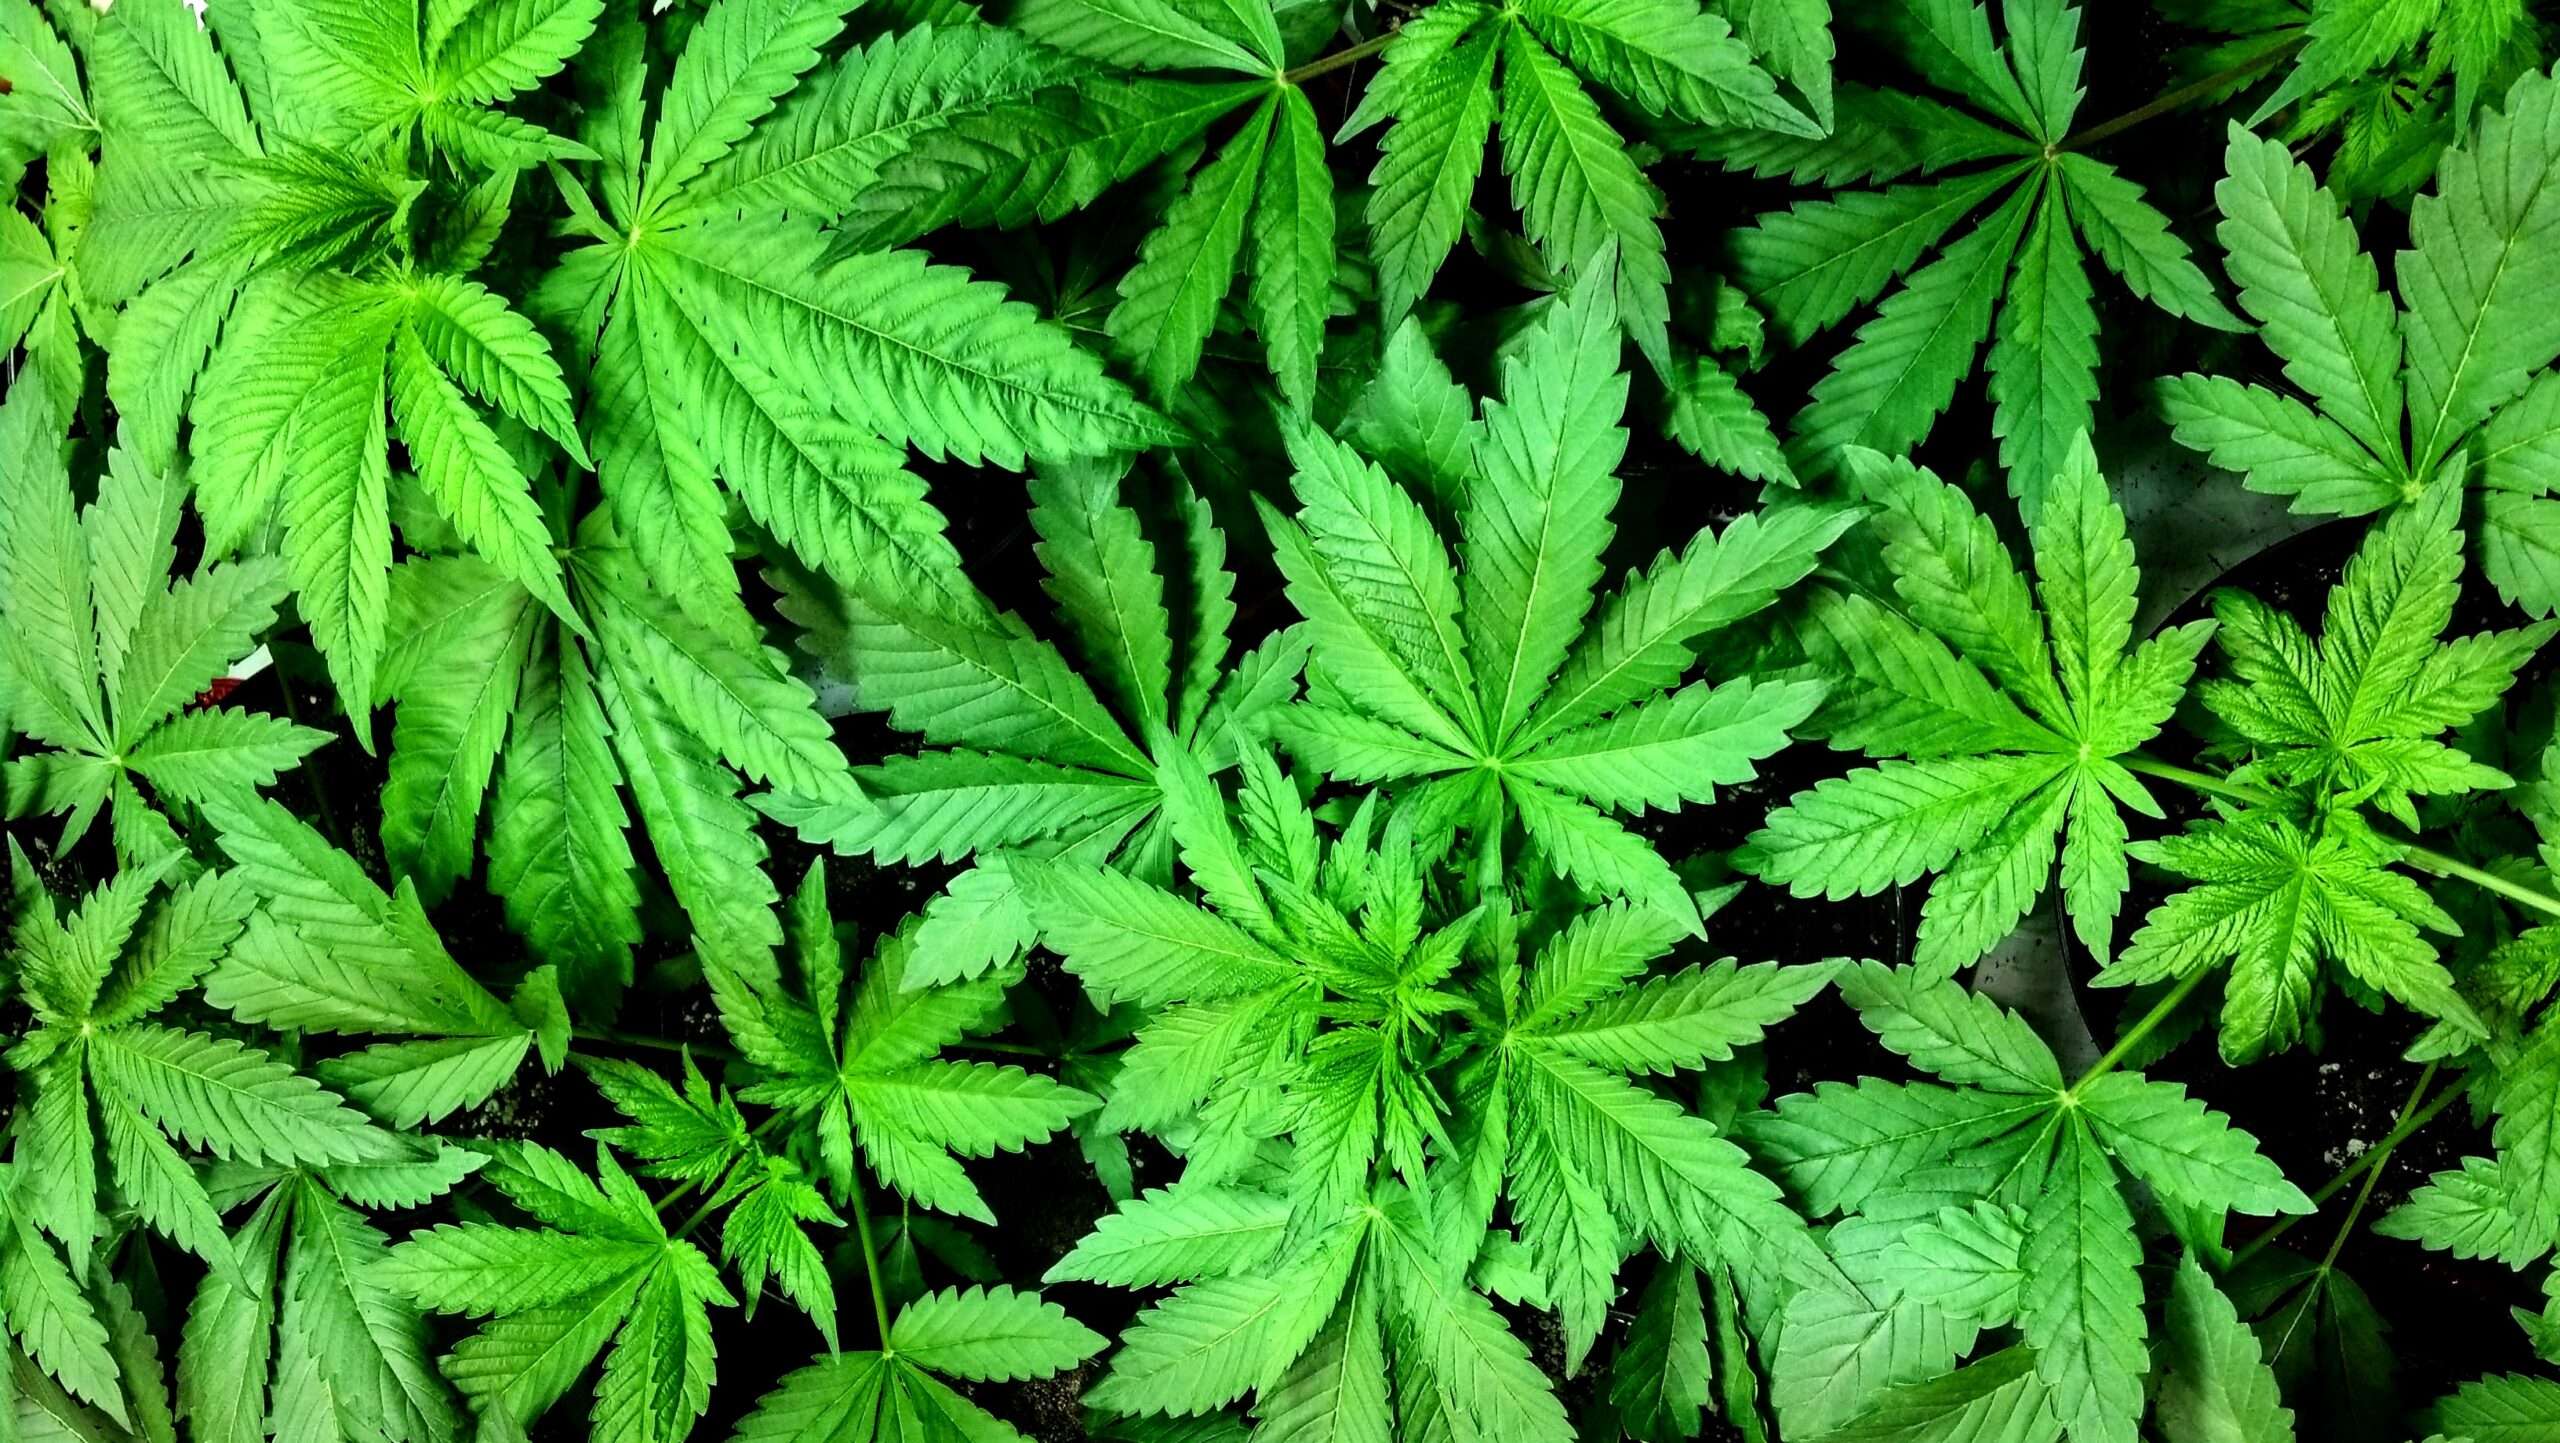 Virginia Republicans push for changes in marijuana law - ABC News